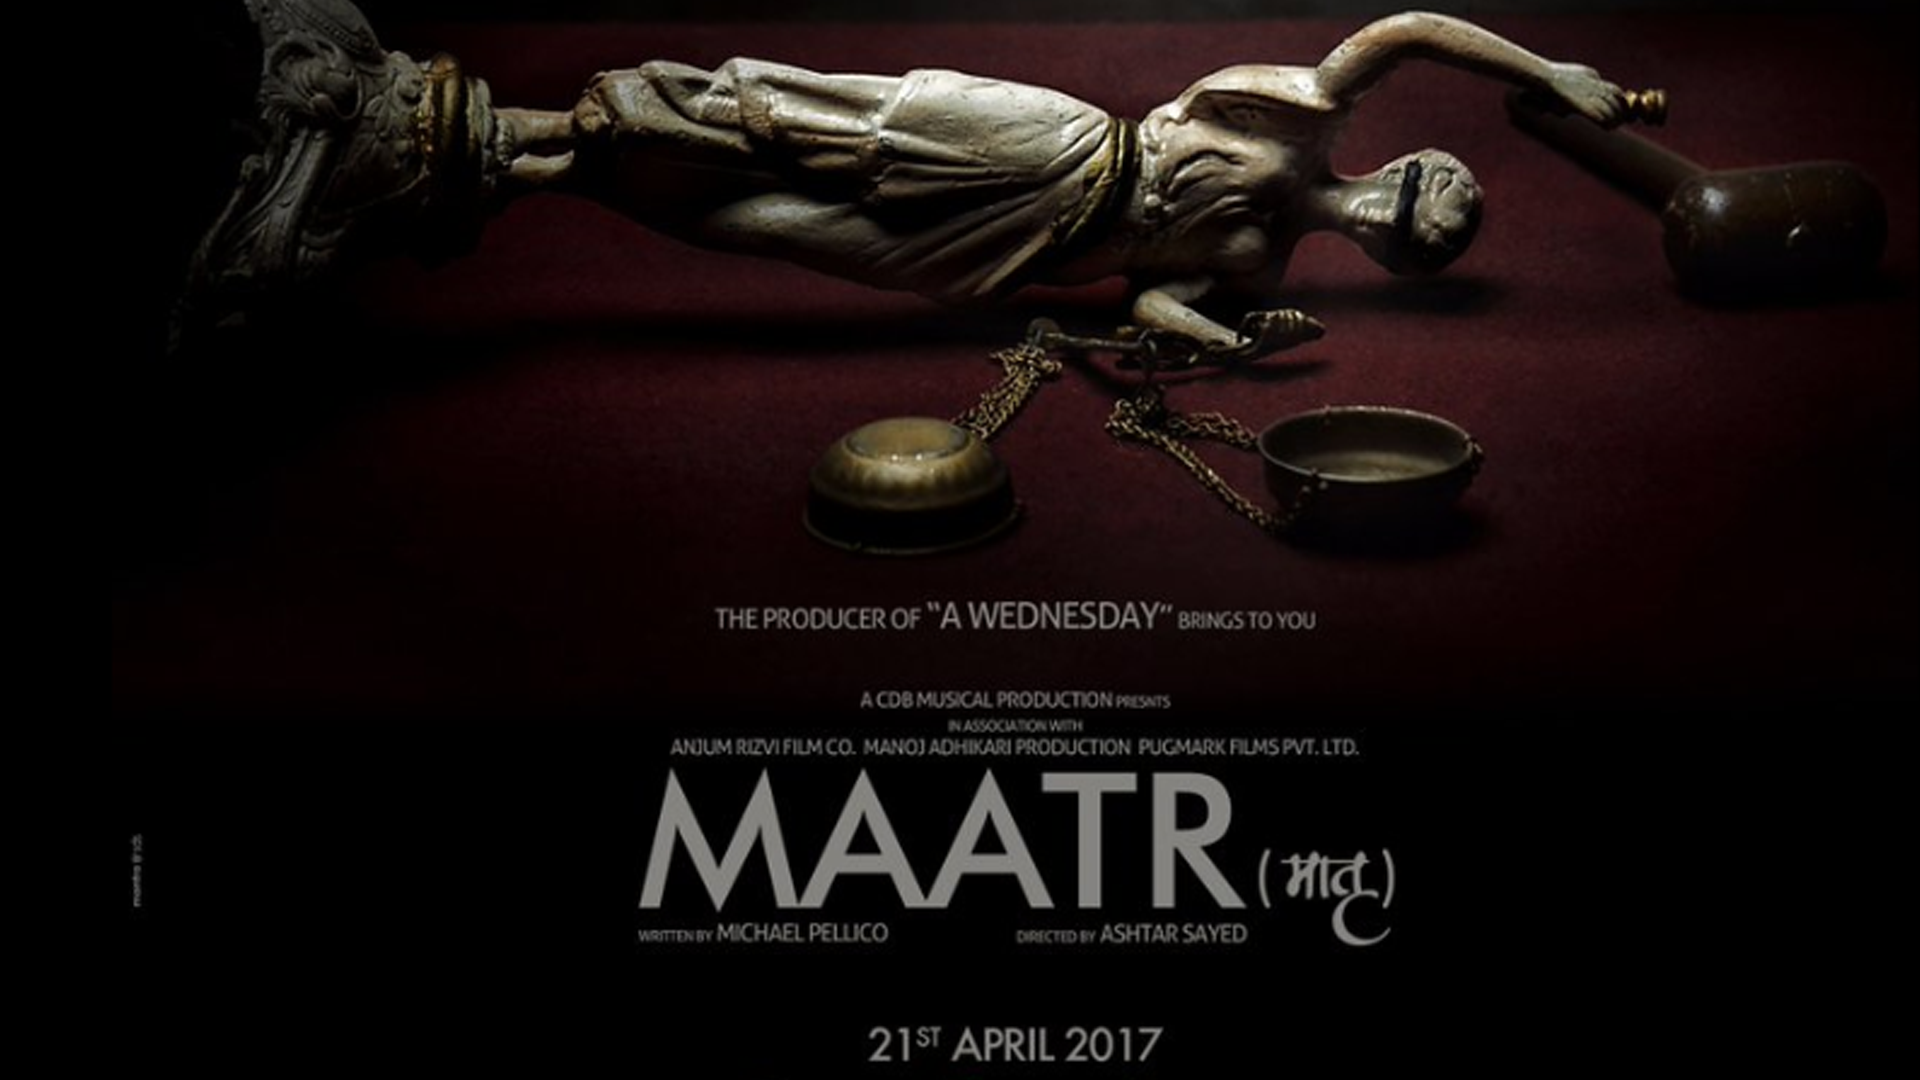 Maatr (2017) First Look Poster